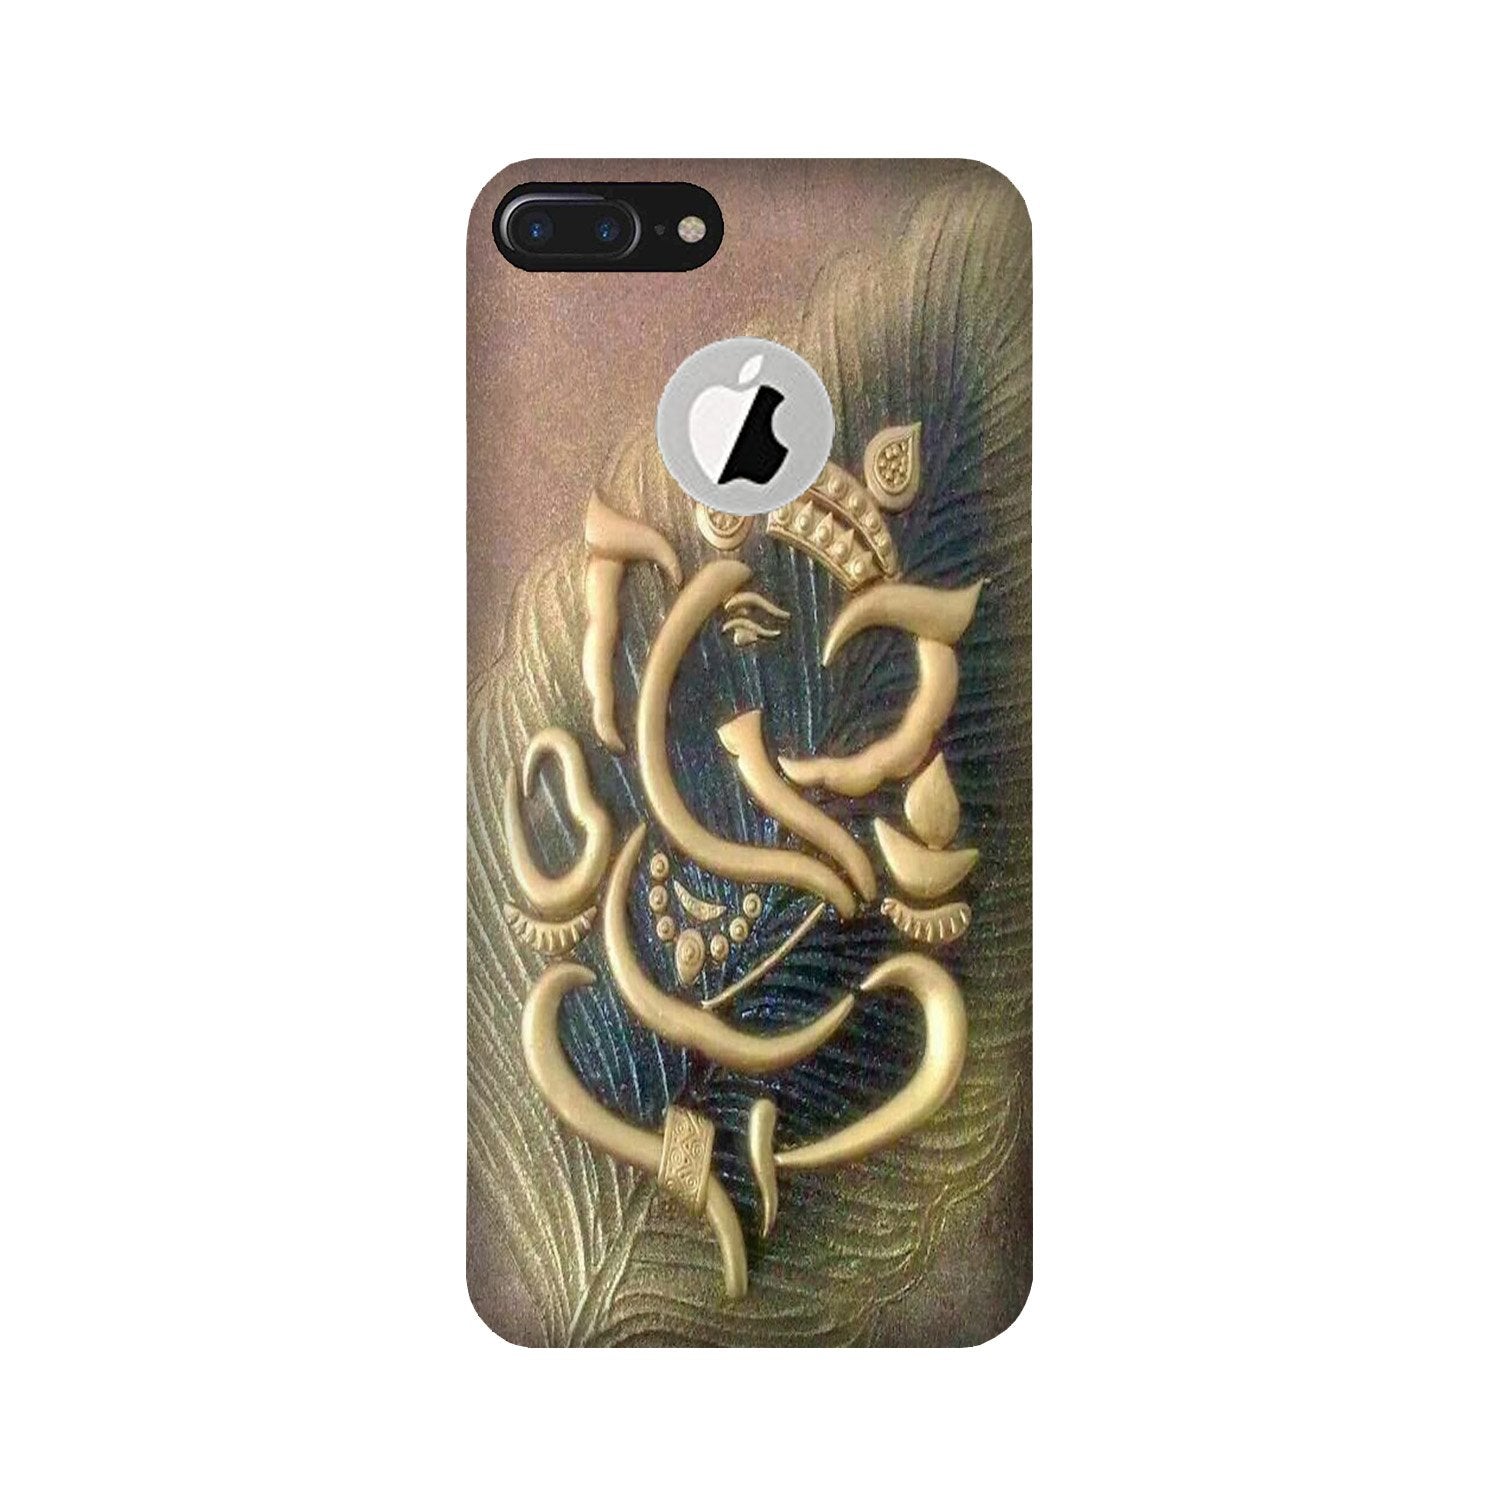 Lord Ganesha Case for iPhone 7 Plus logo cut